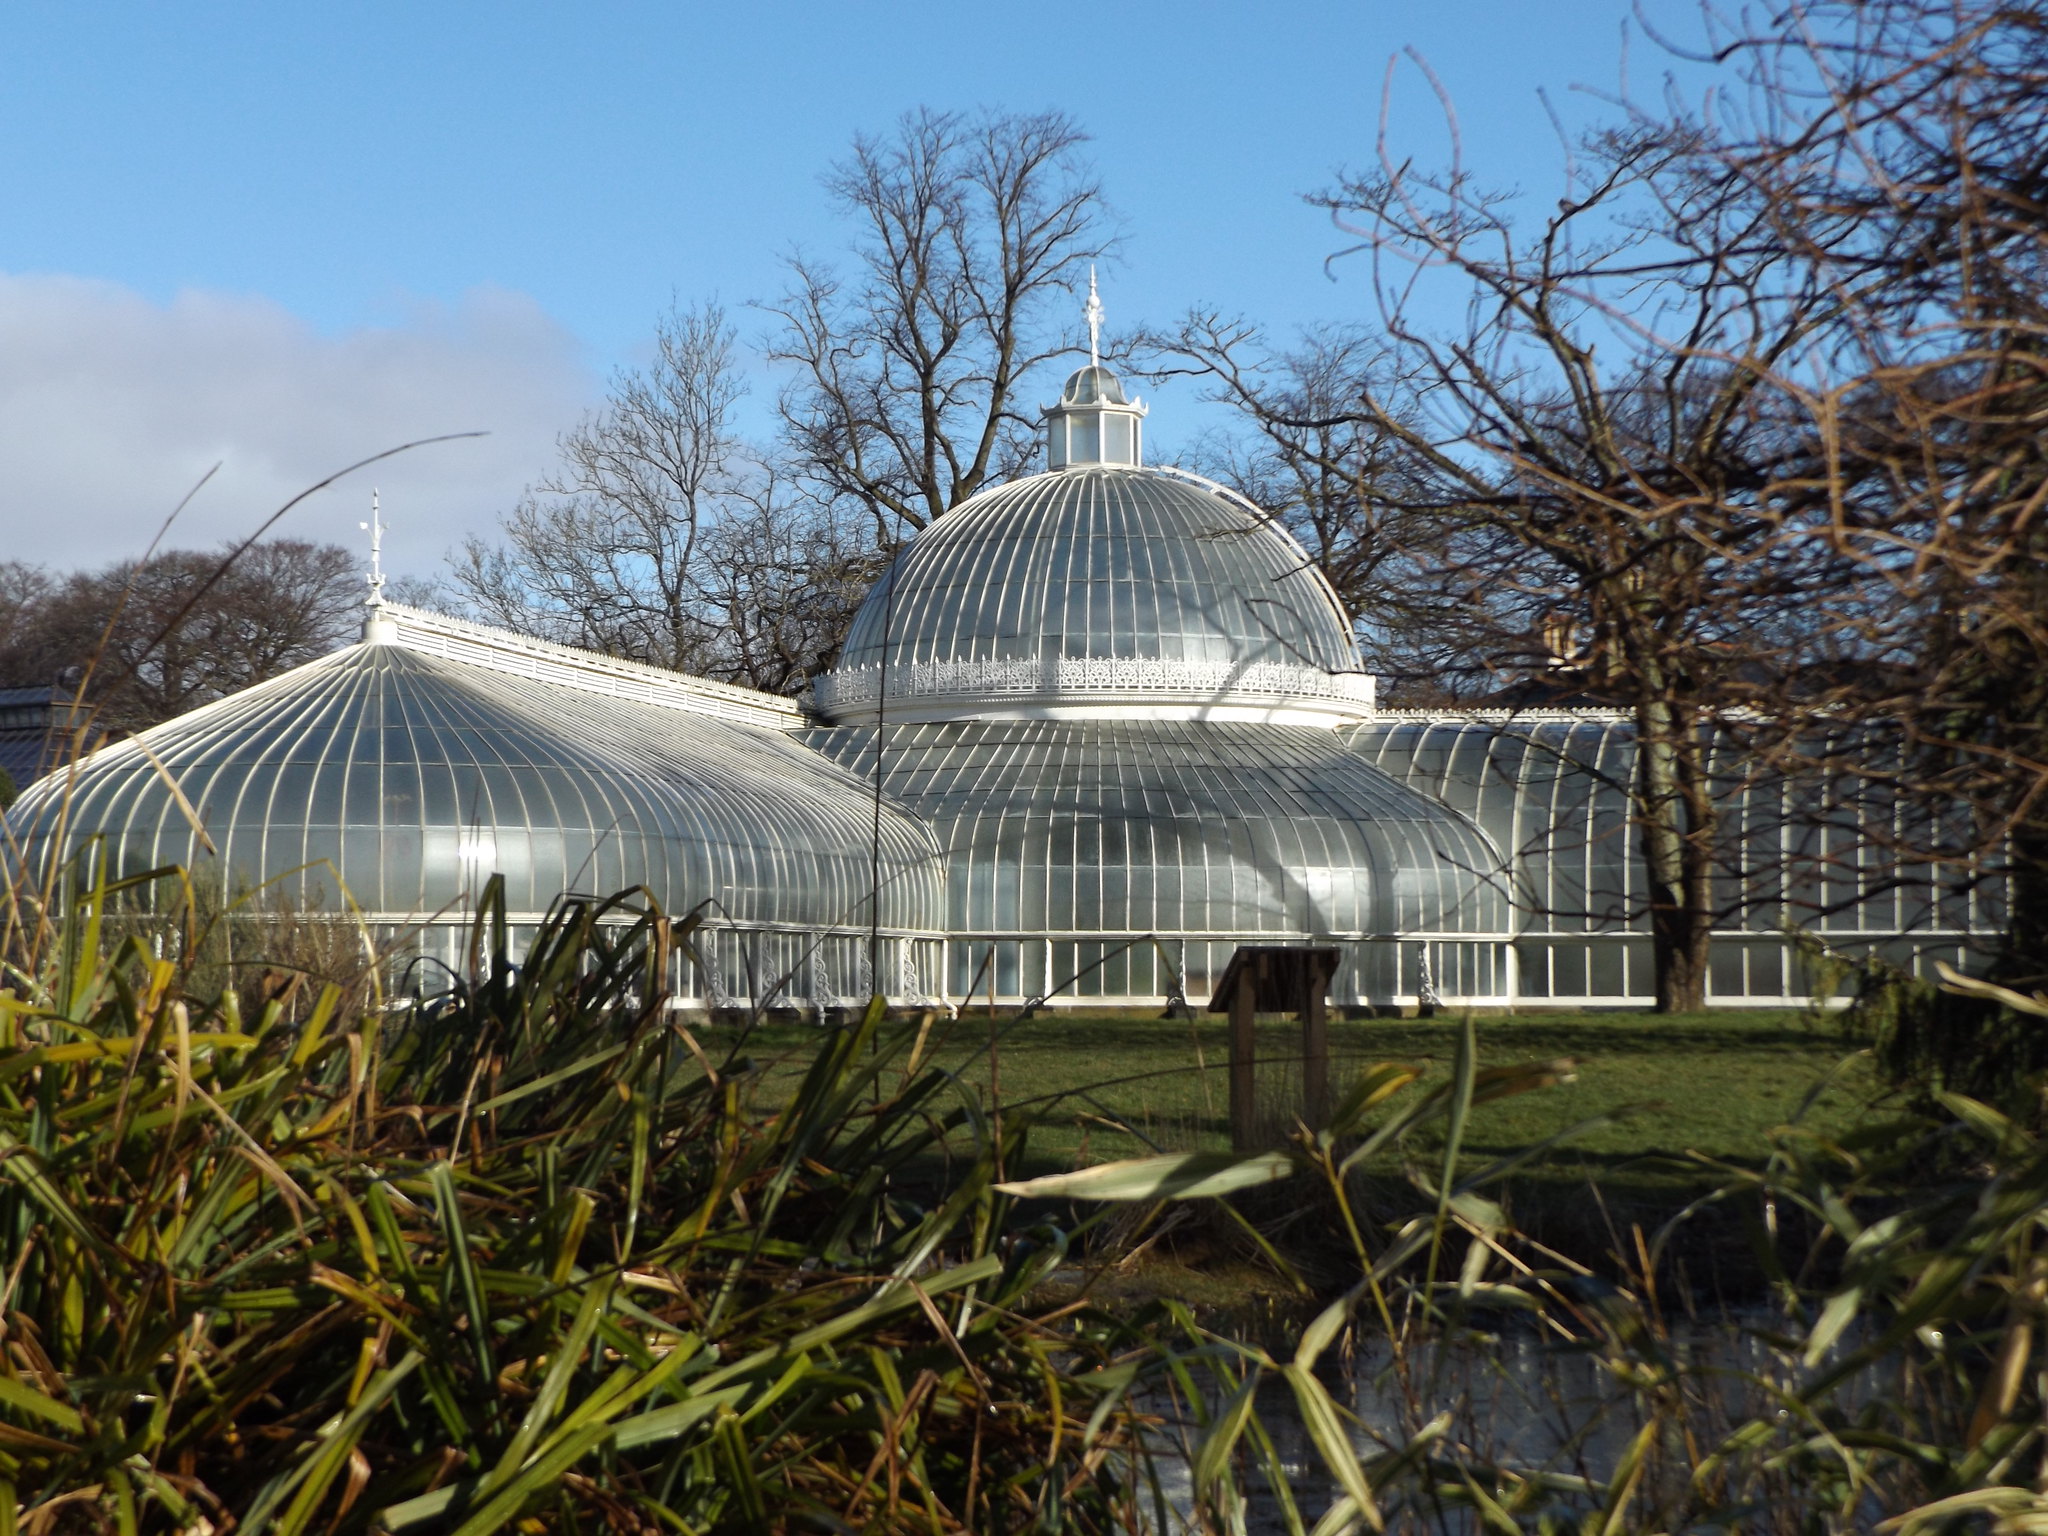 Kibble Palace and Pond, Botanic Gardens, Glasgow, 5 April 2018